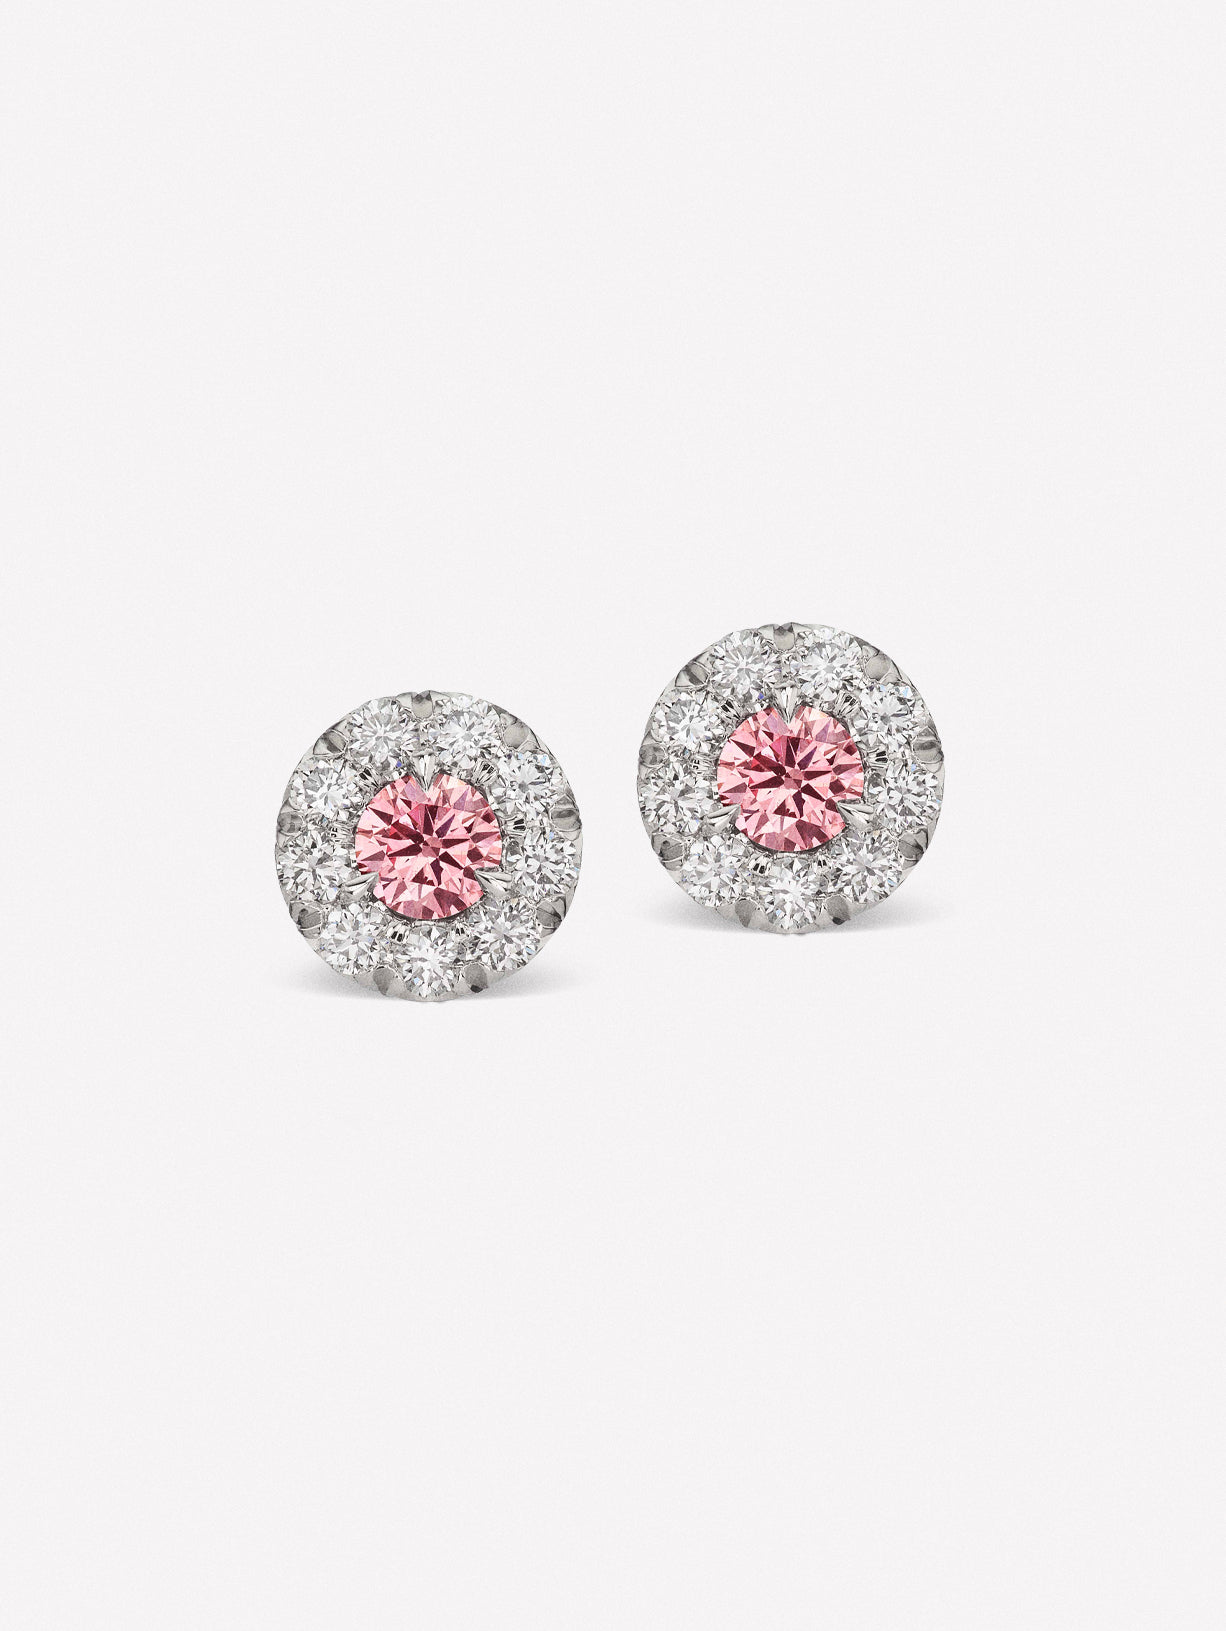 Argyle Pink™ 3PR Diamond Halo Studs - Pink Diamonds, J FINE - J Fine, earrings - Pink Diamond Jewelry, argyle-studs-by-j-f-i-n-e - Argyle Pink Diamonds